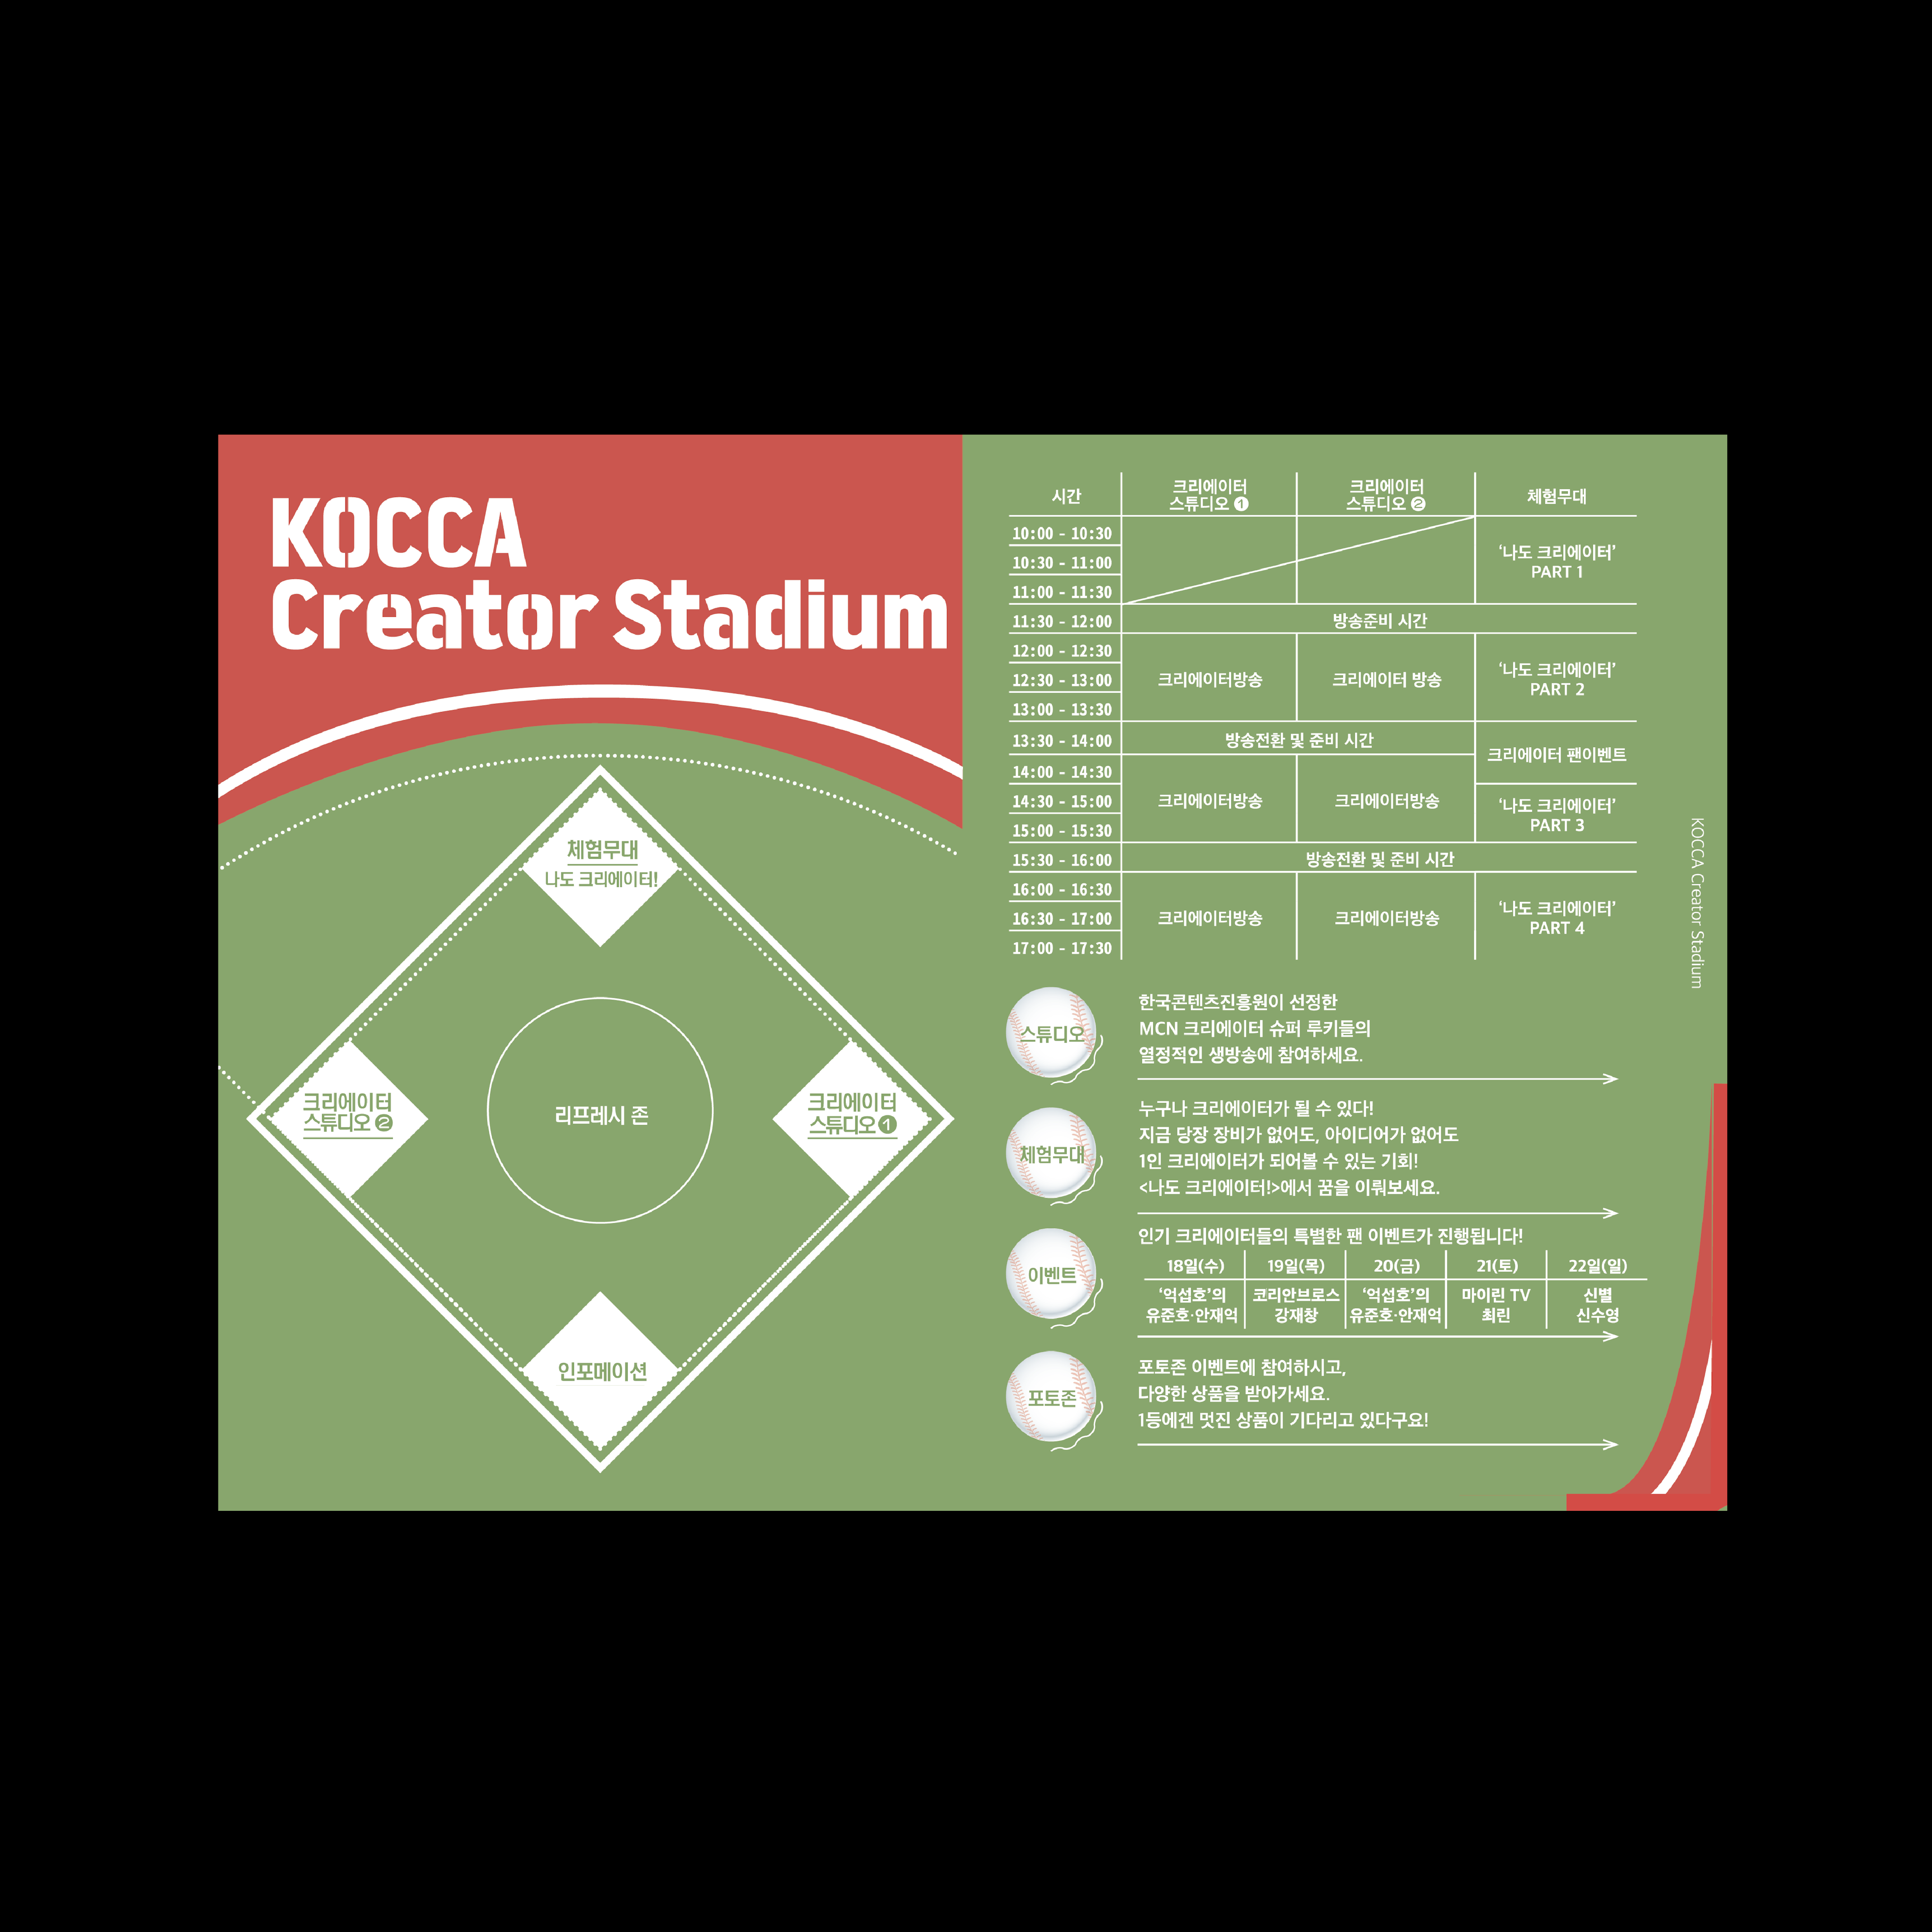 Kocca Creator Stadium 2018